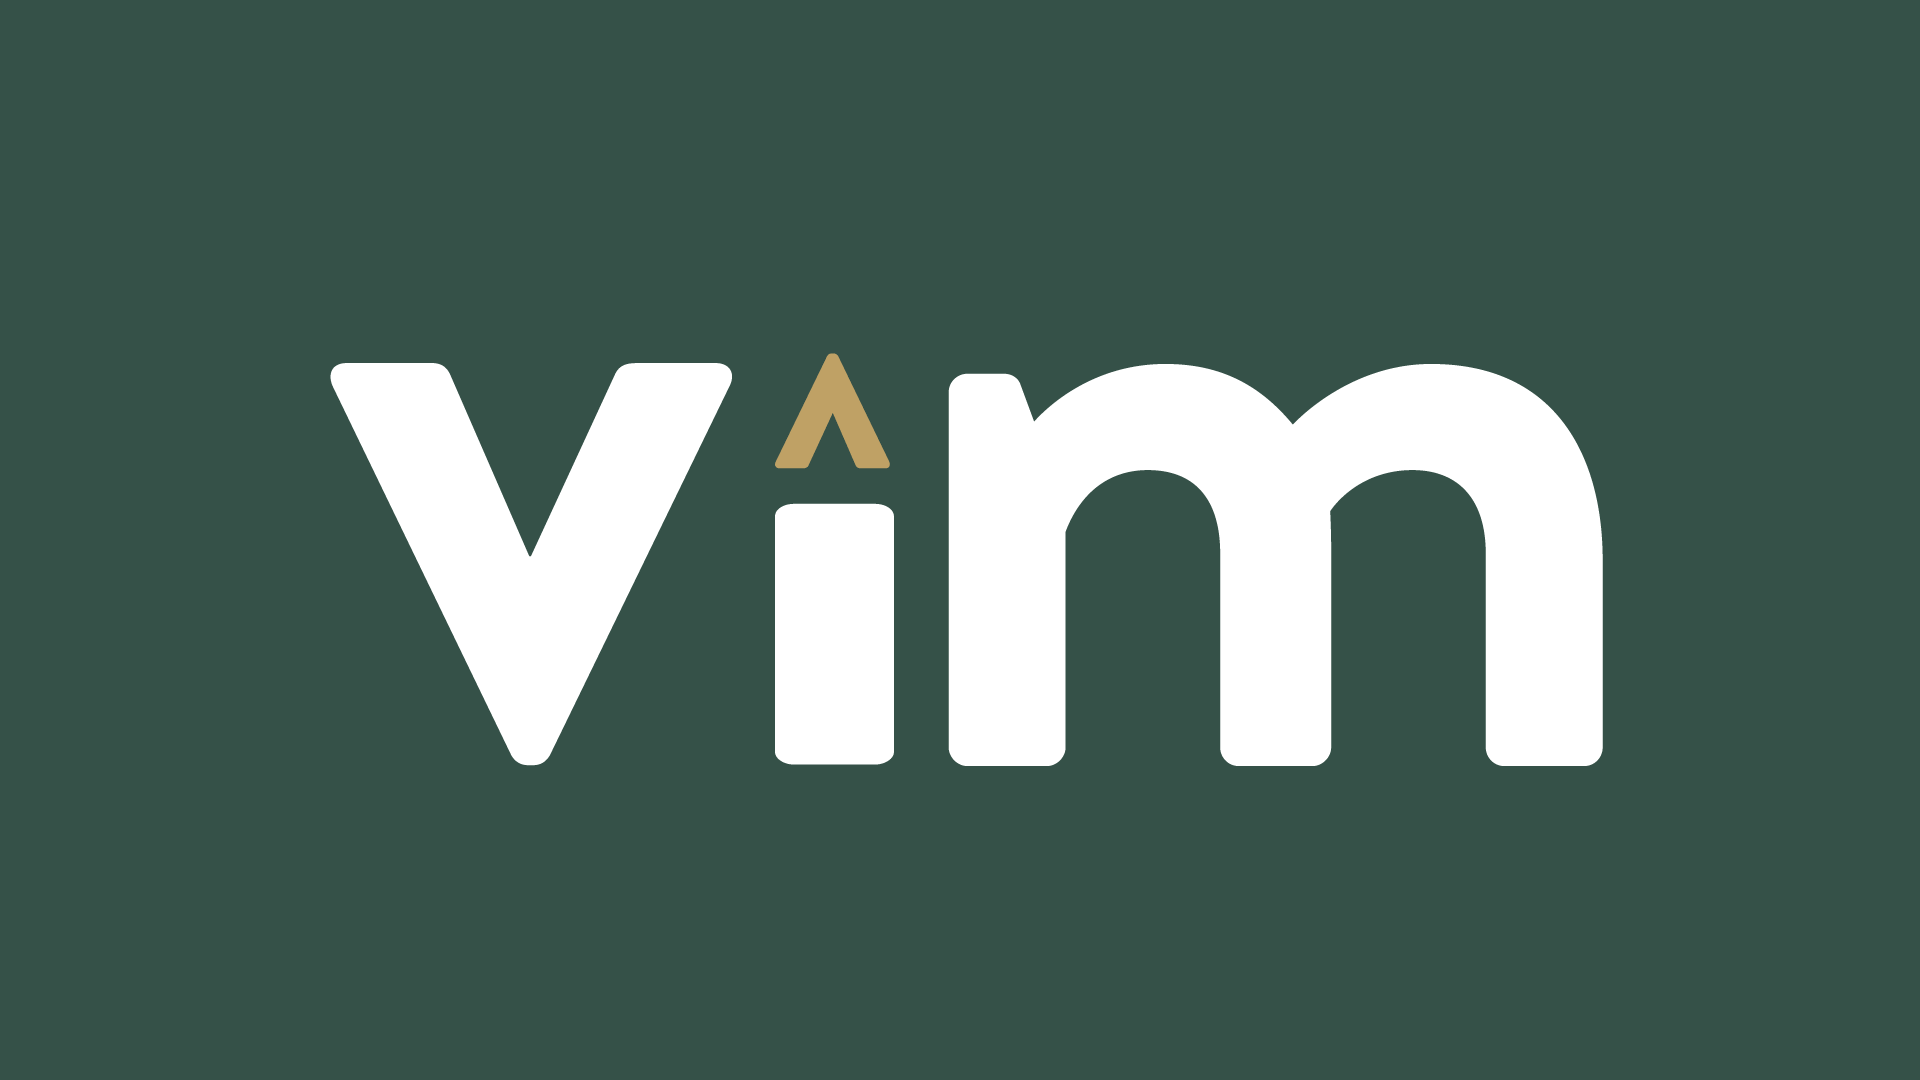 vim value investing mentorship